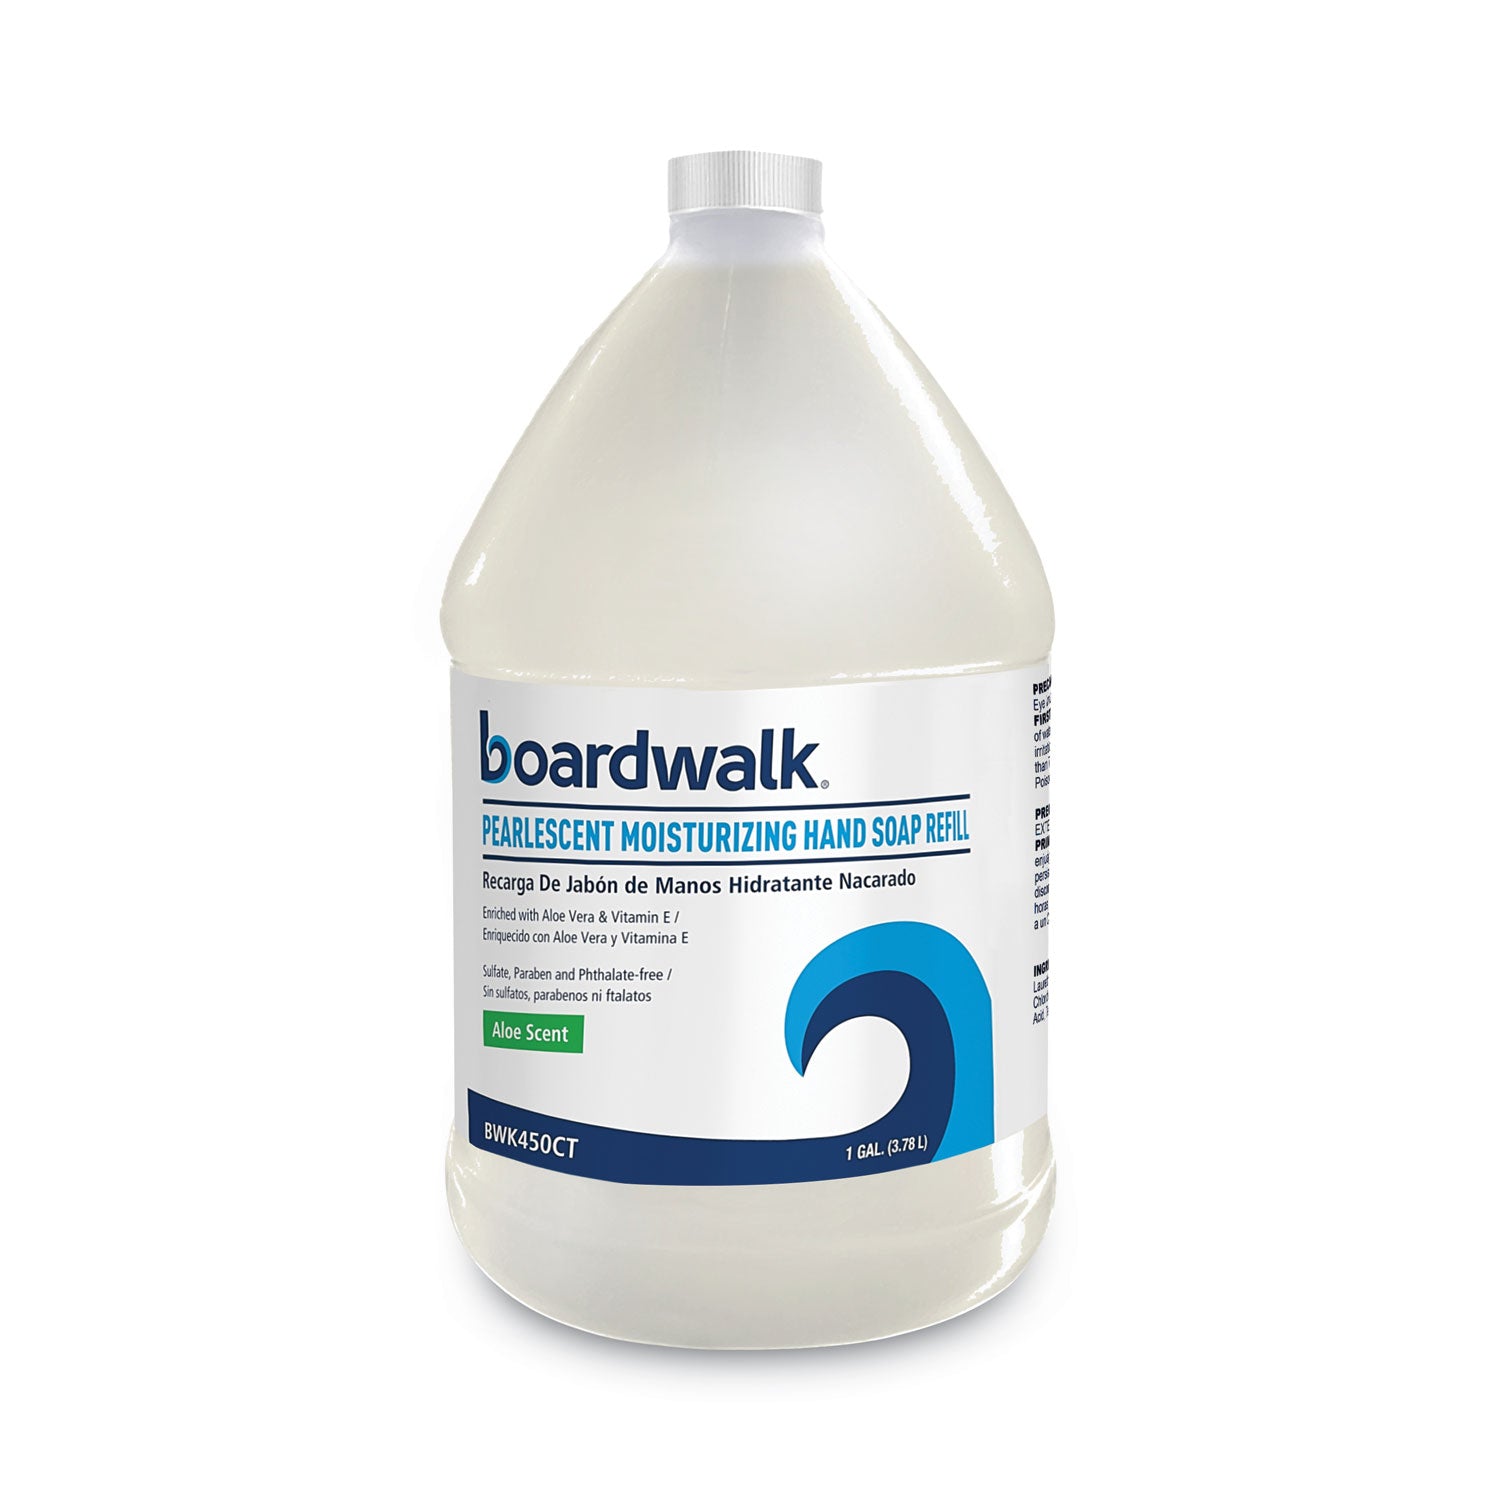 pearlescent-moisturizing-liquid-hand-soap-refill-aloe-scent-1-gal-bottle_bwk450ea - 1